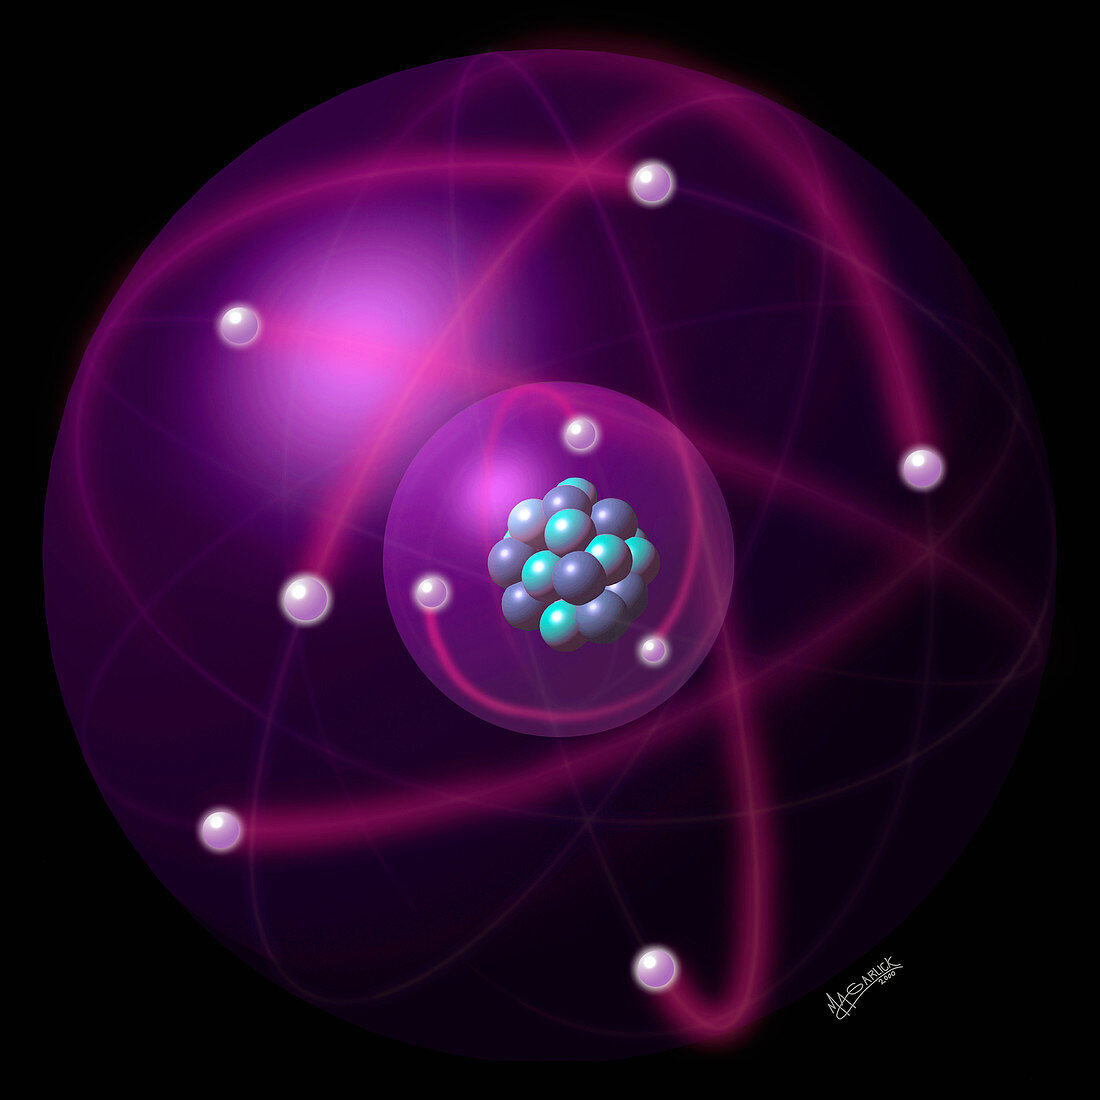 Artwork of an atom